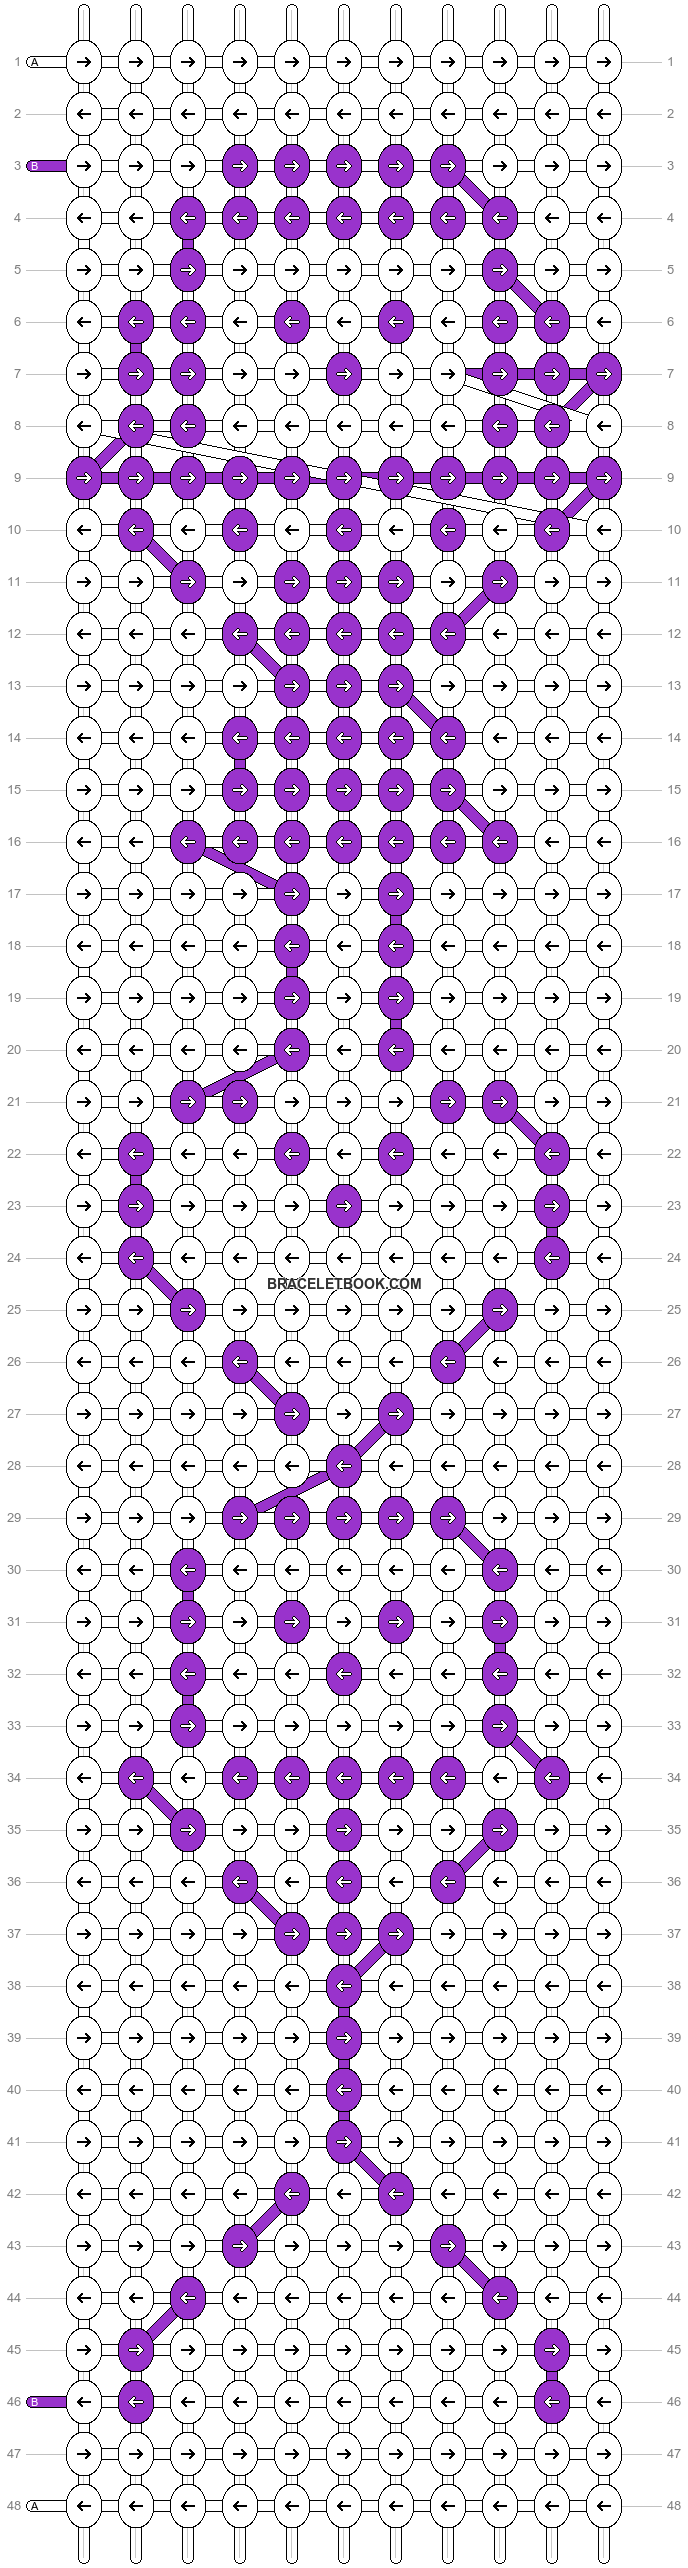 Alpha pattern #7275 pattern